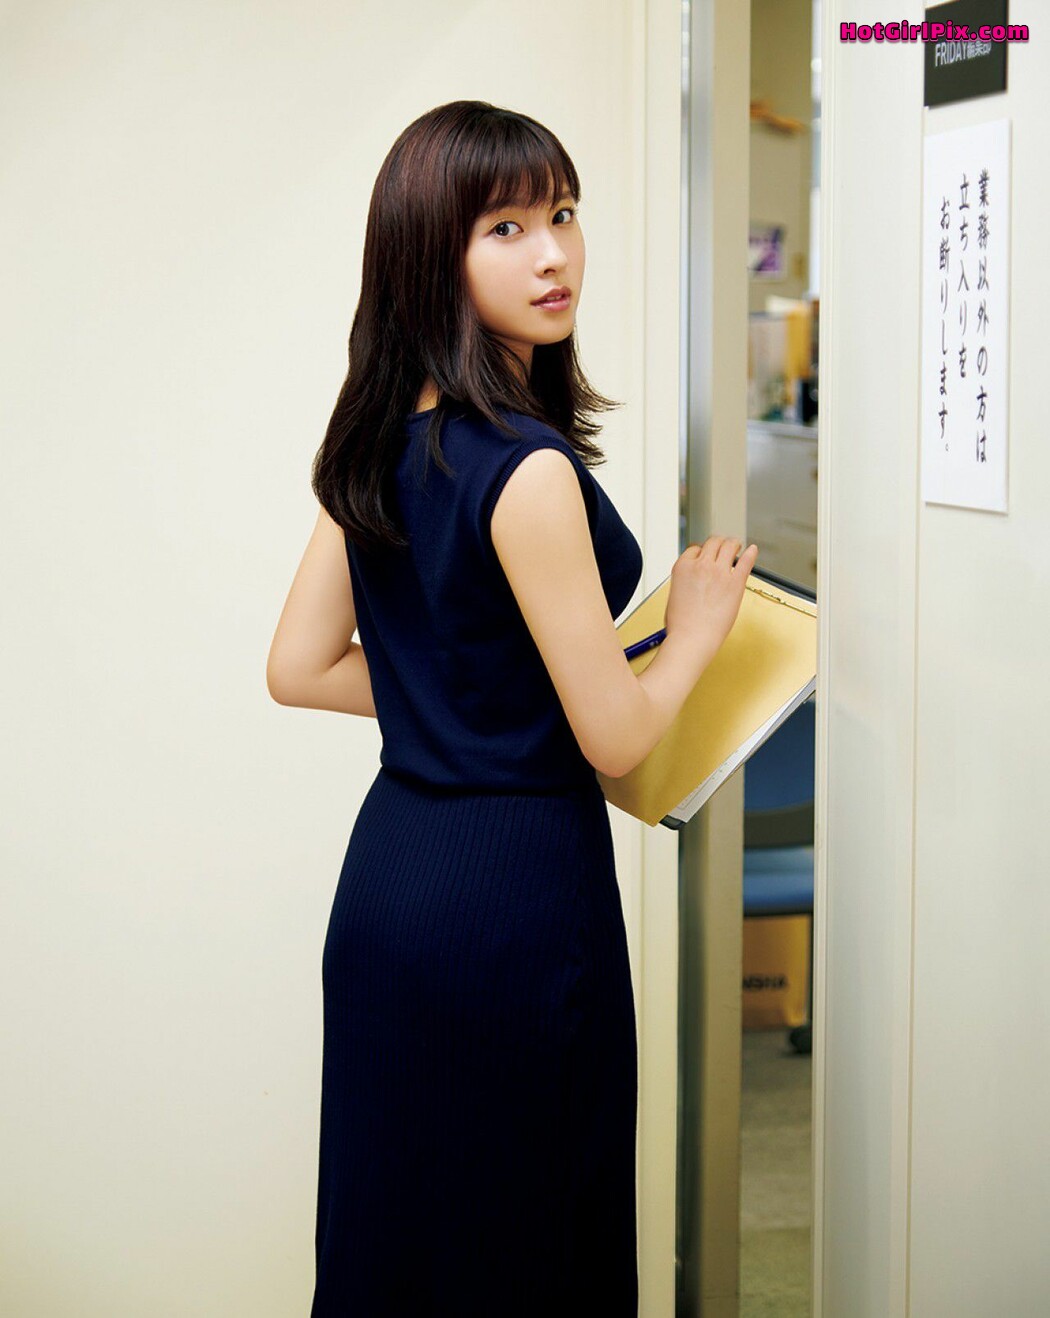 [FRIDAY] Tao Tsuchiya - "Sexy in the office" Photo